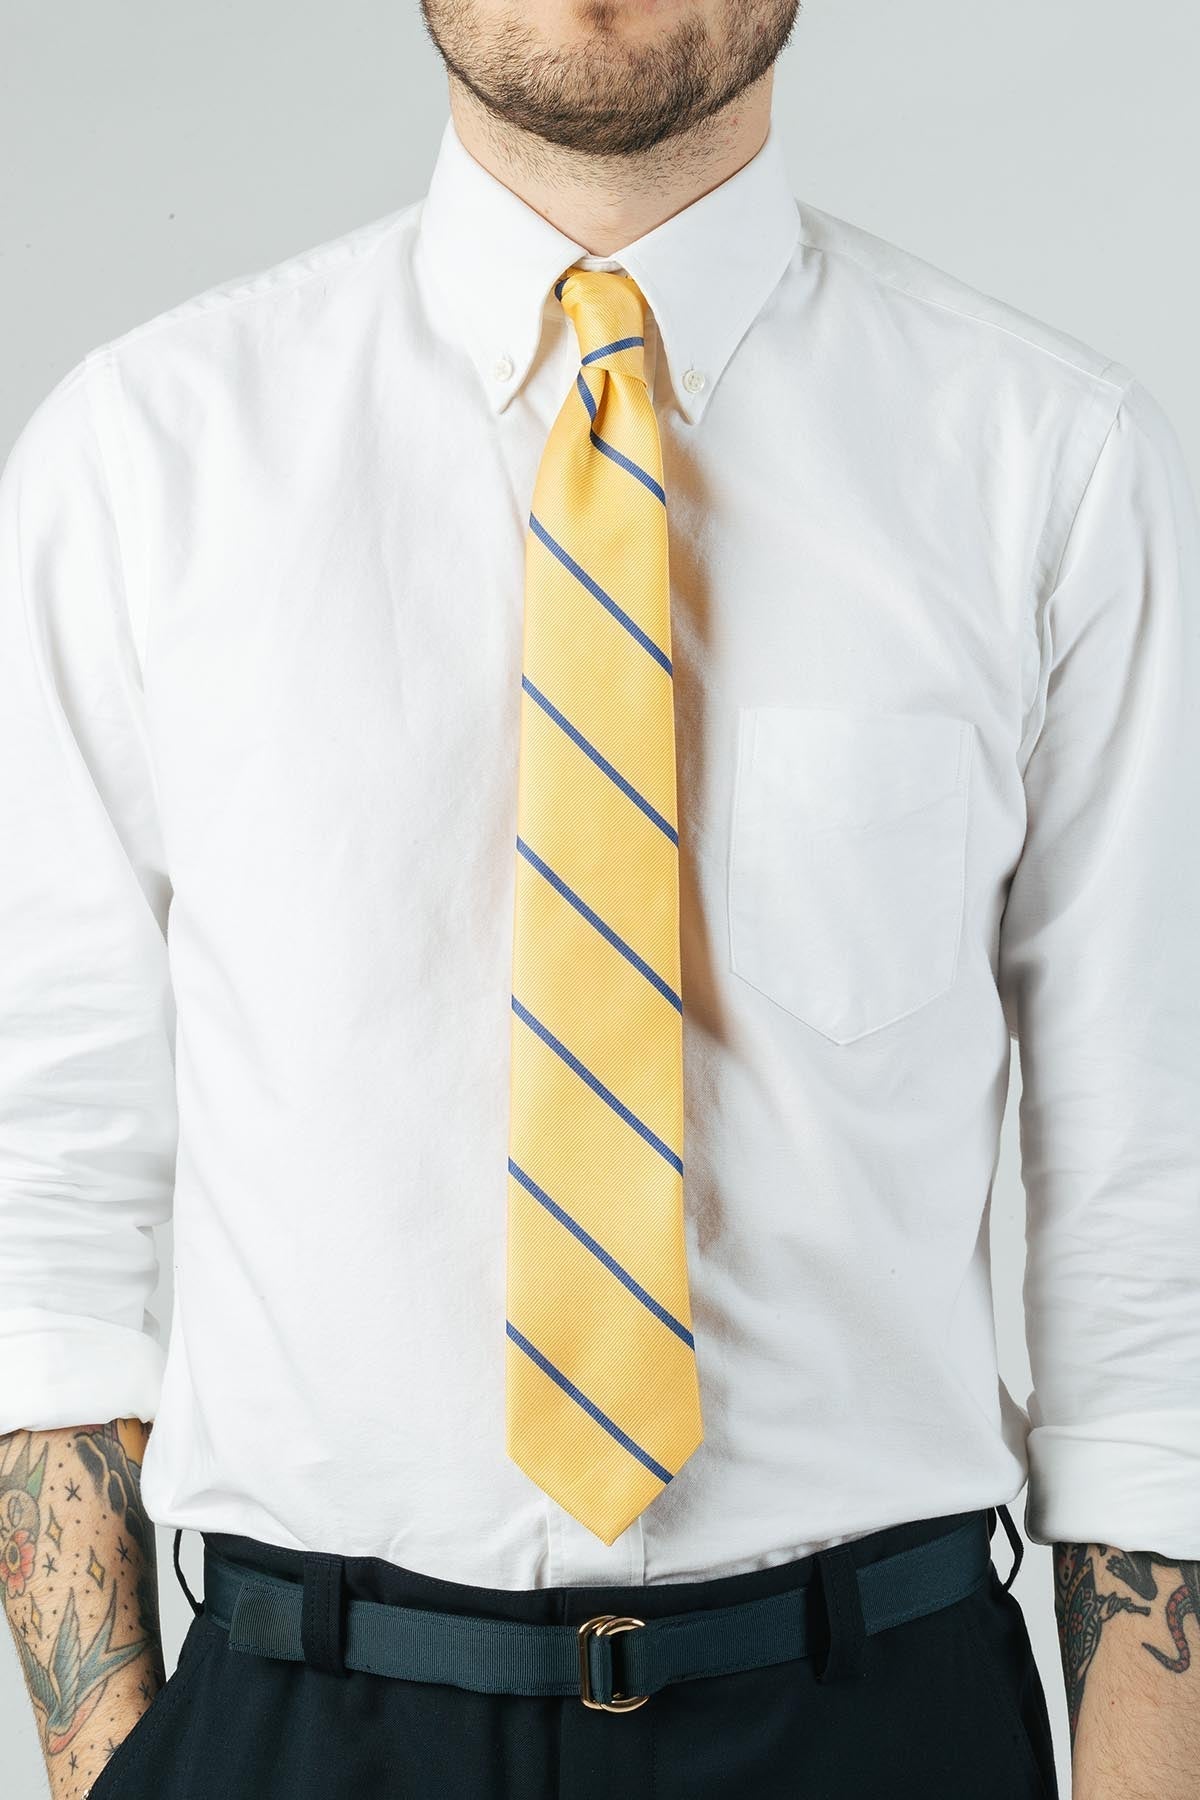 AN IVY Slips Yellow Blue Single Stripes Silk Tie